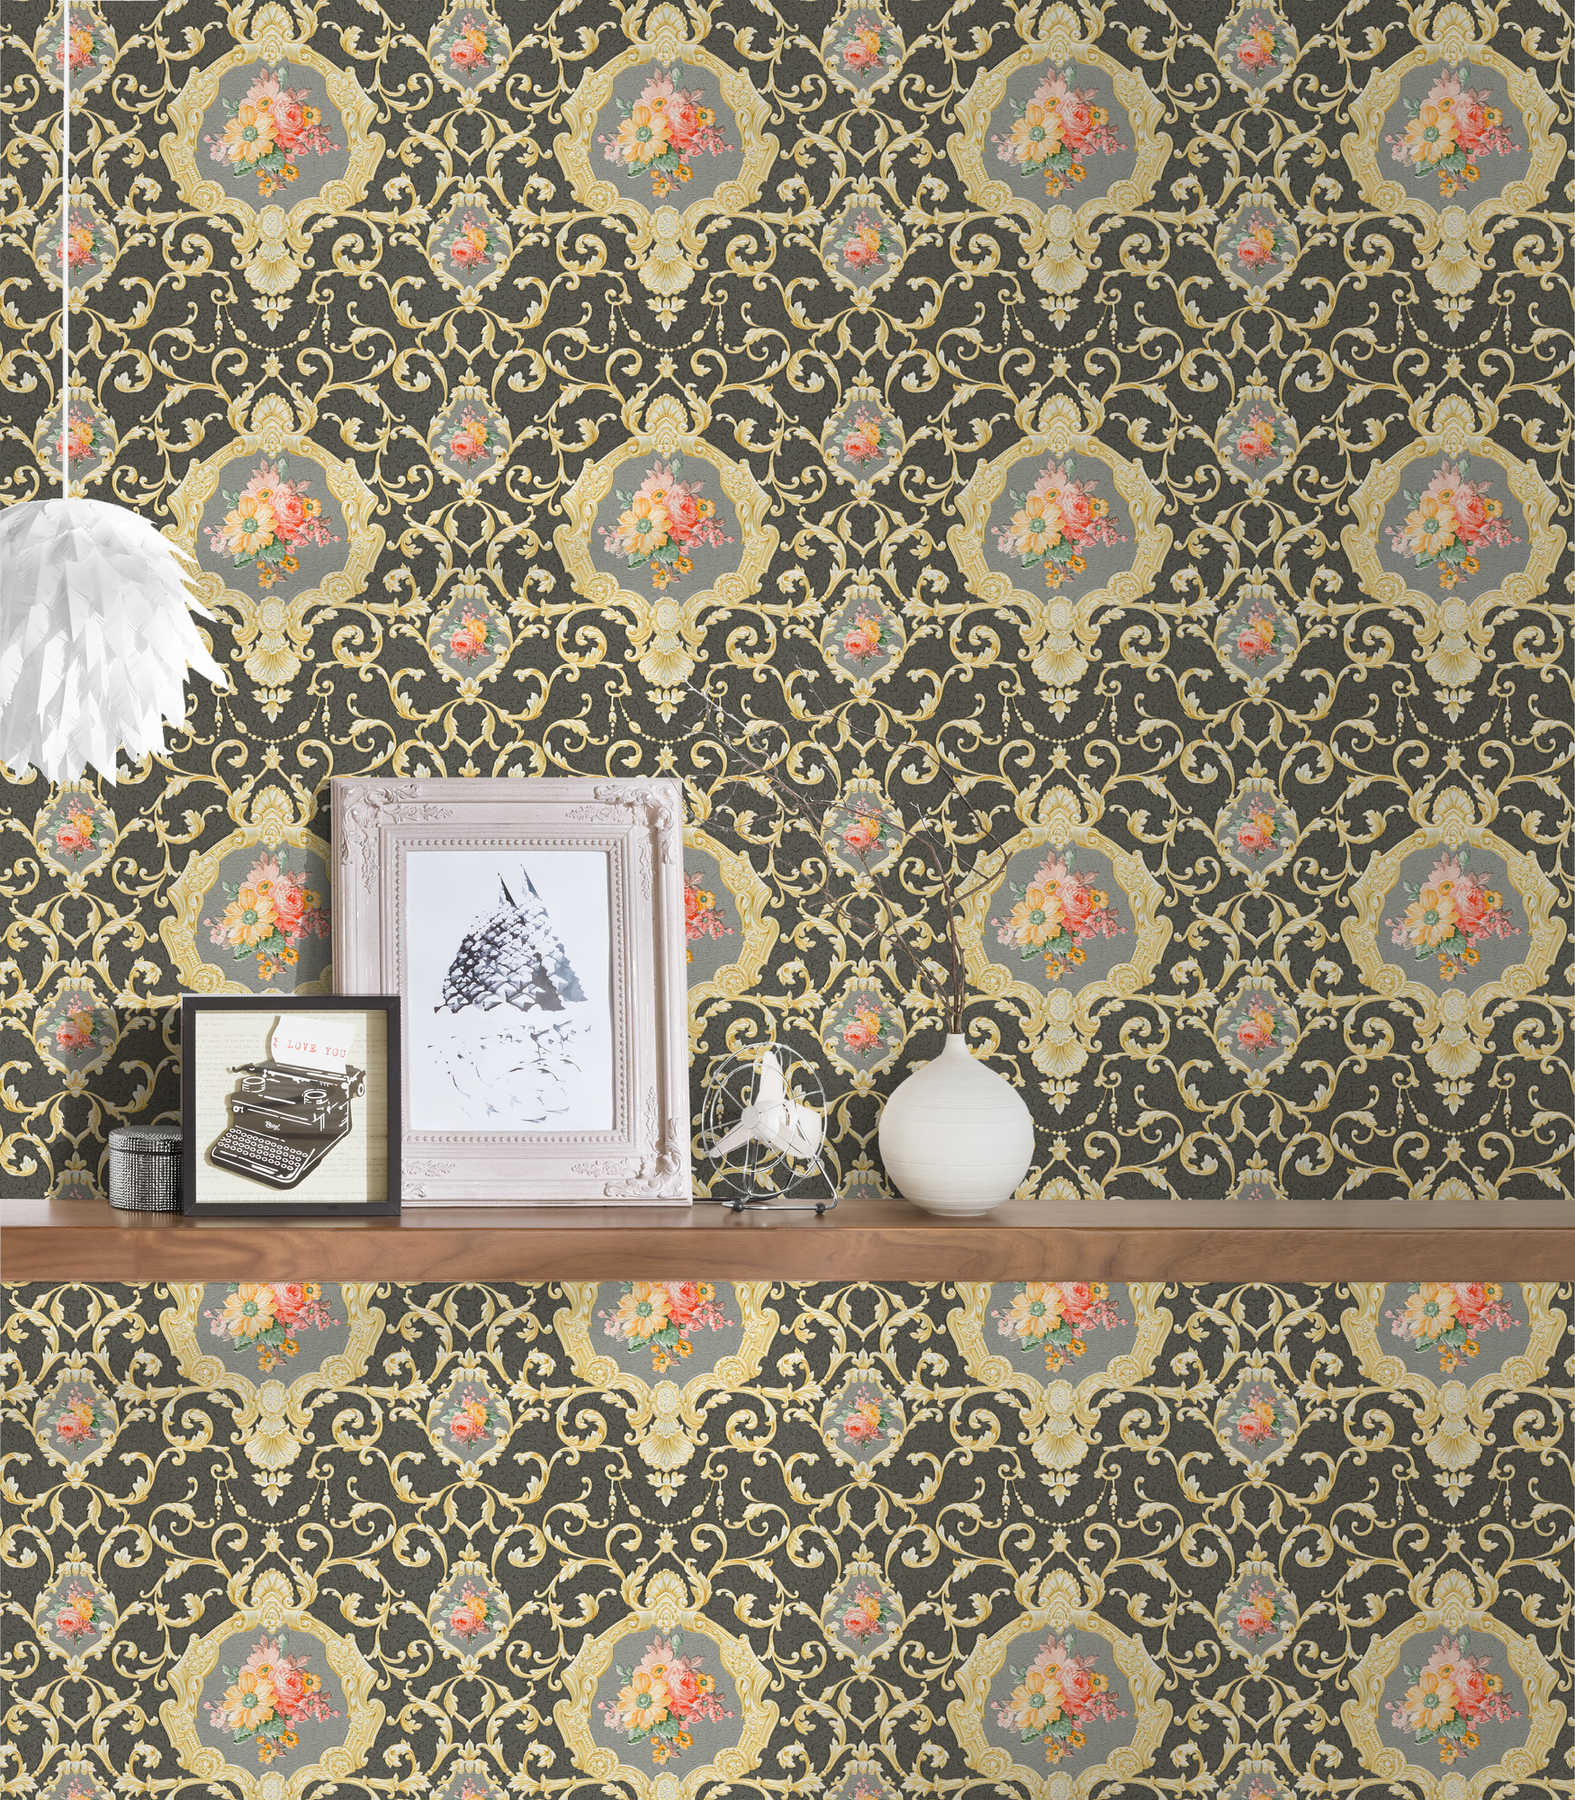             Luxury wallpaper with ornamental pattern & floral bouquet - Metallic, Black
        